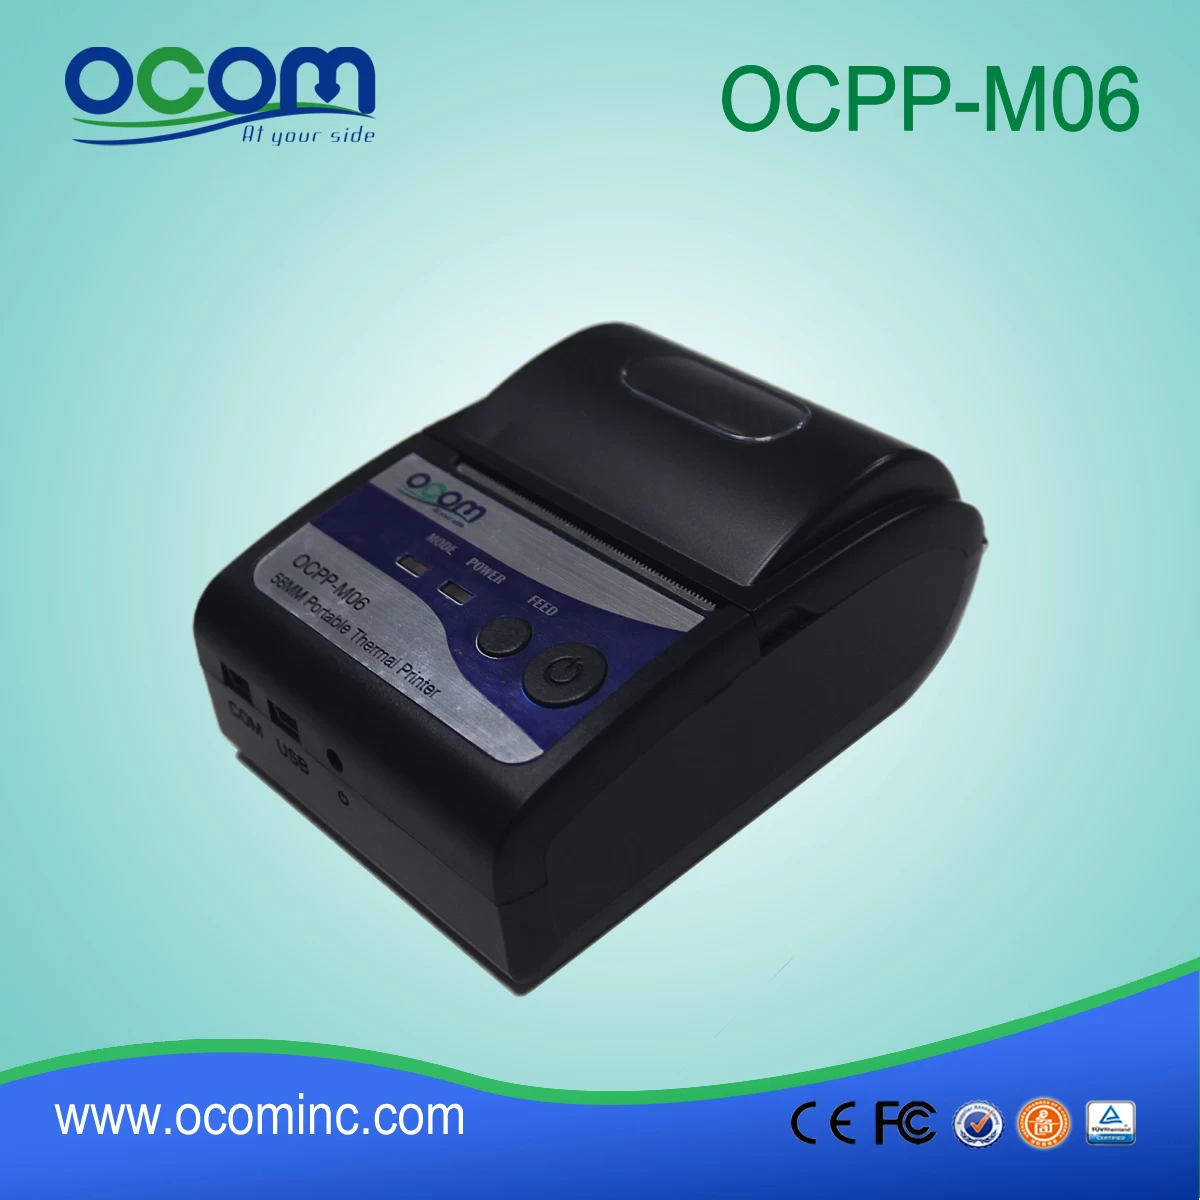 OCPP-M06: OCOM Hot selling cheap 58mm bluetooth printer, bluetooth printer 58mm